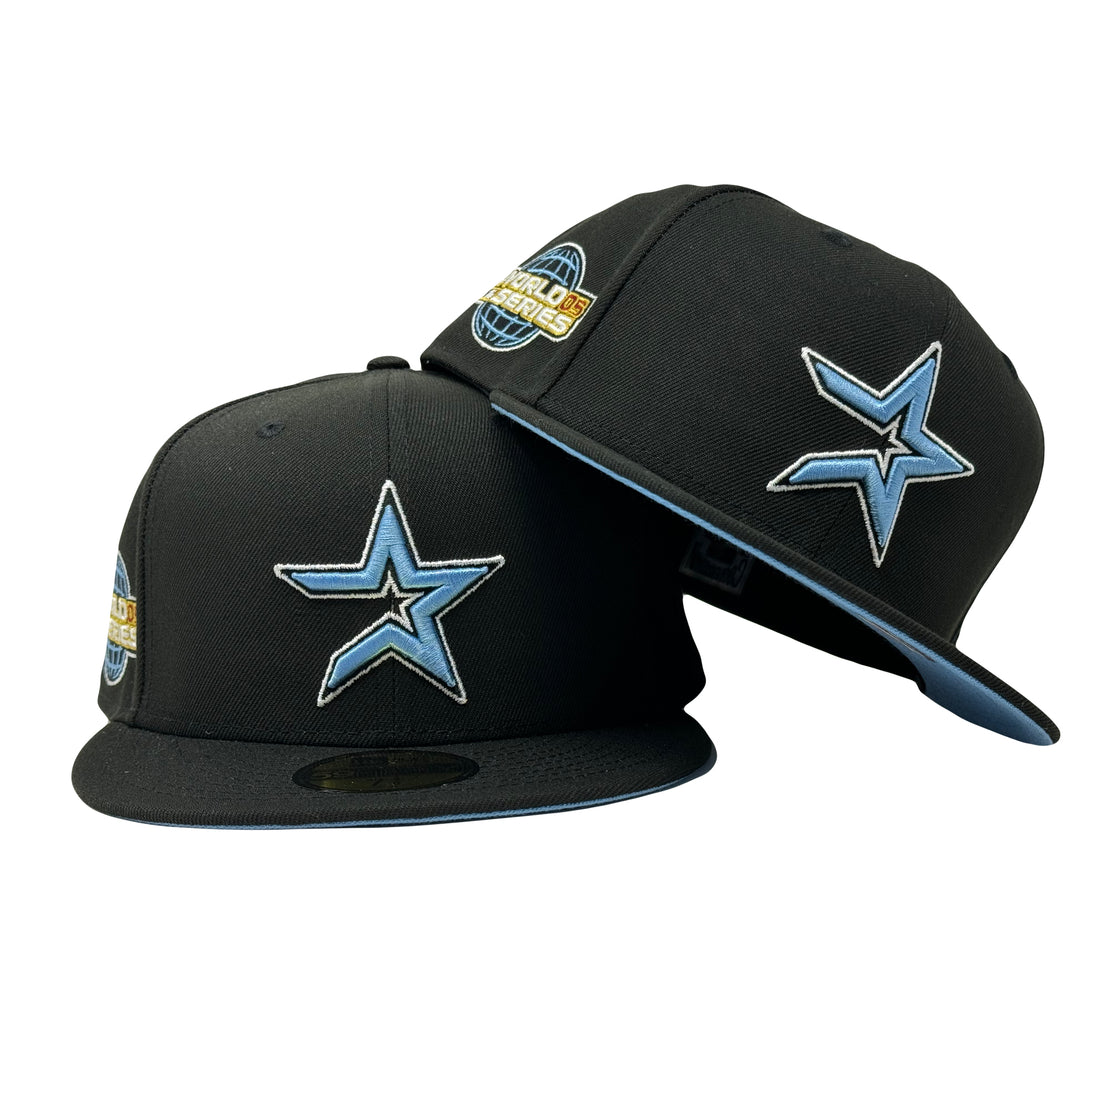 Houston Astros 2005 World Series Black Icy Brim New Era Fitted Hat